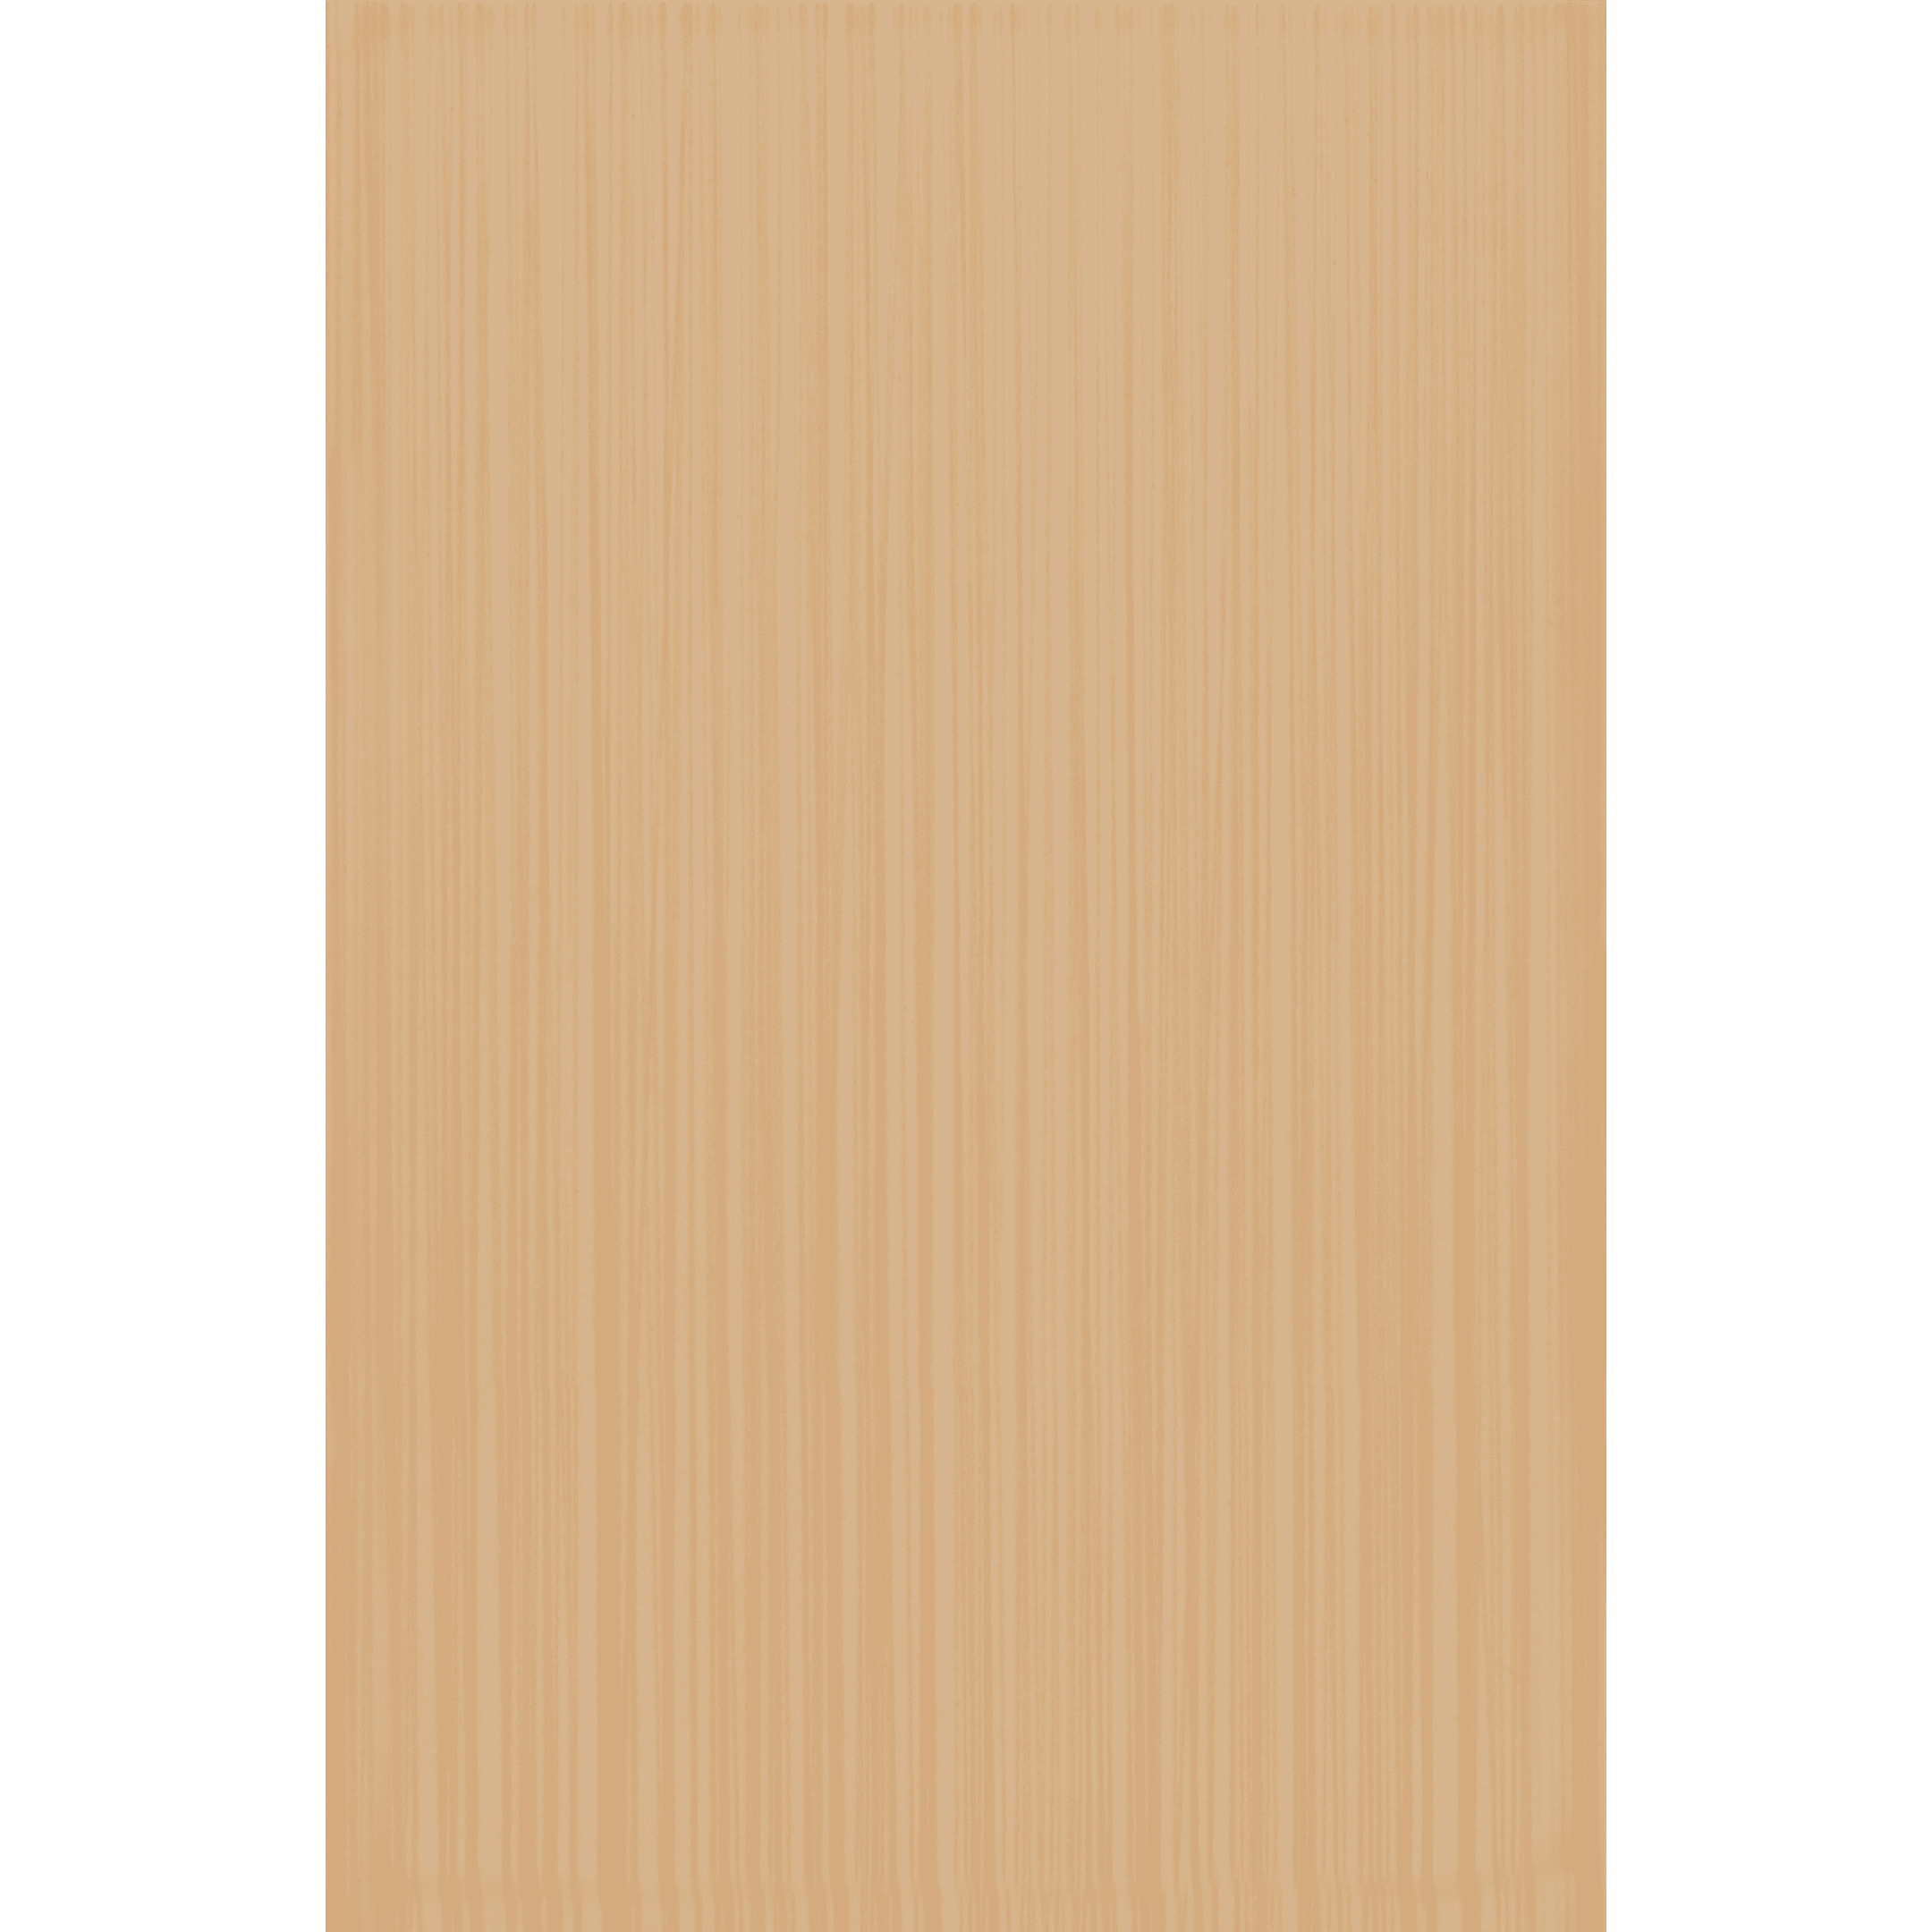 фото Плитка облицовочная cersanit light бежевая 300x200x7 мм (20 шт.=1,2 кв.м)